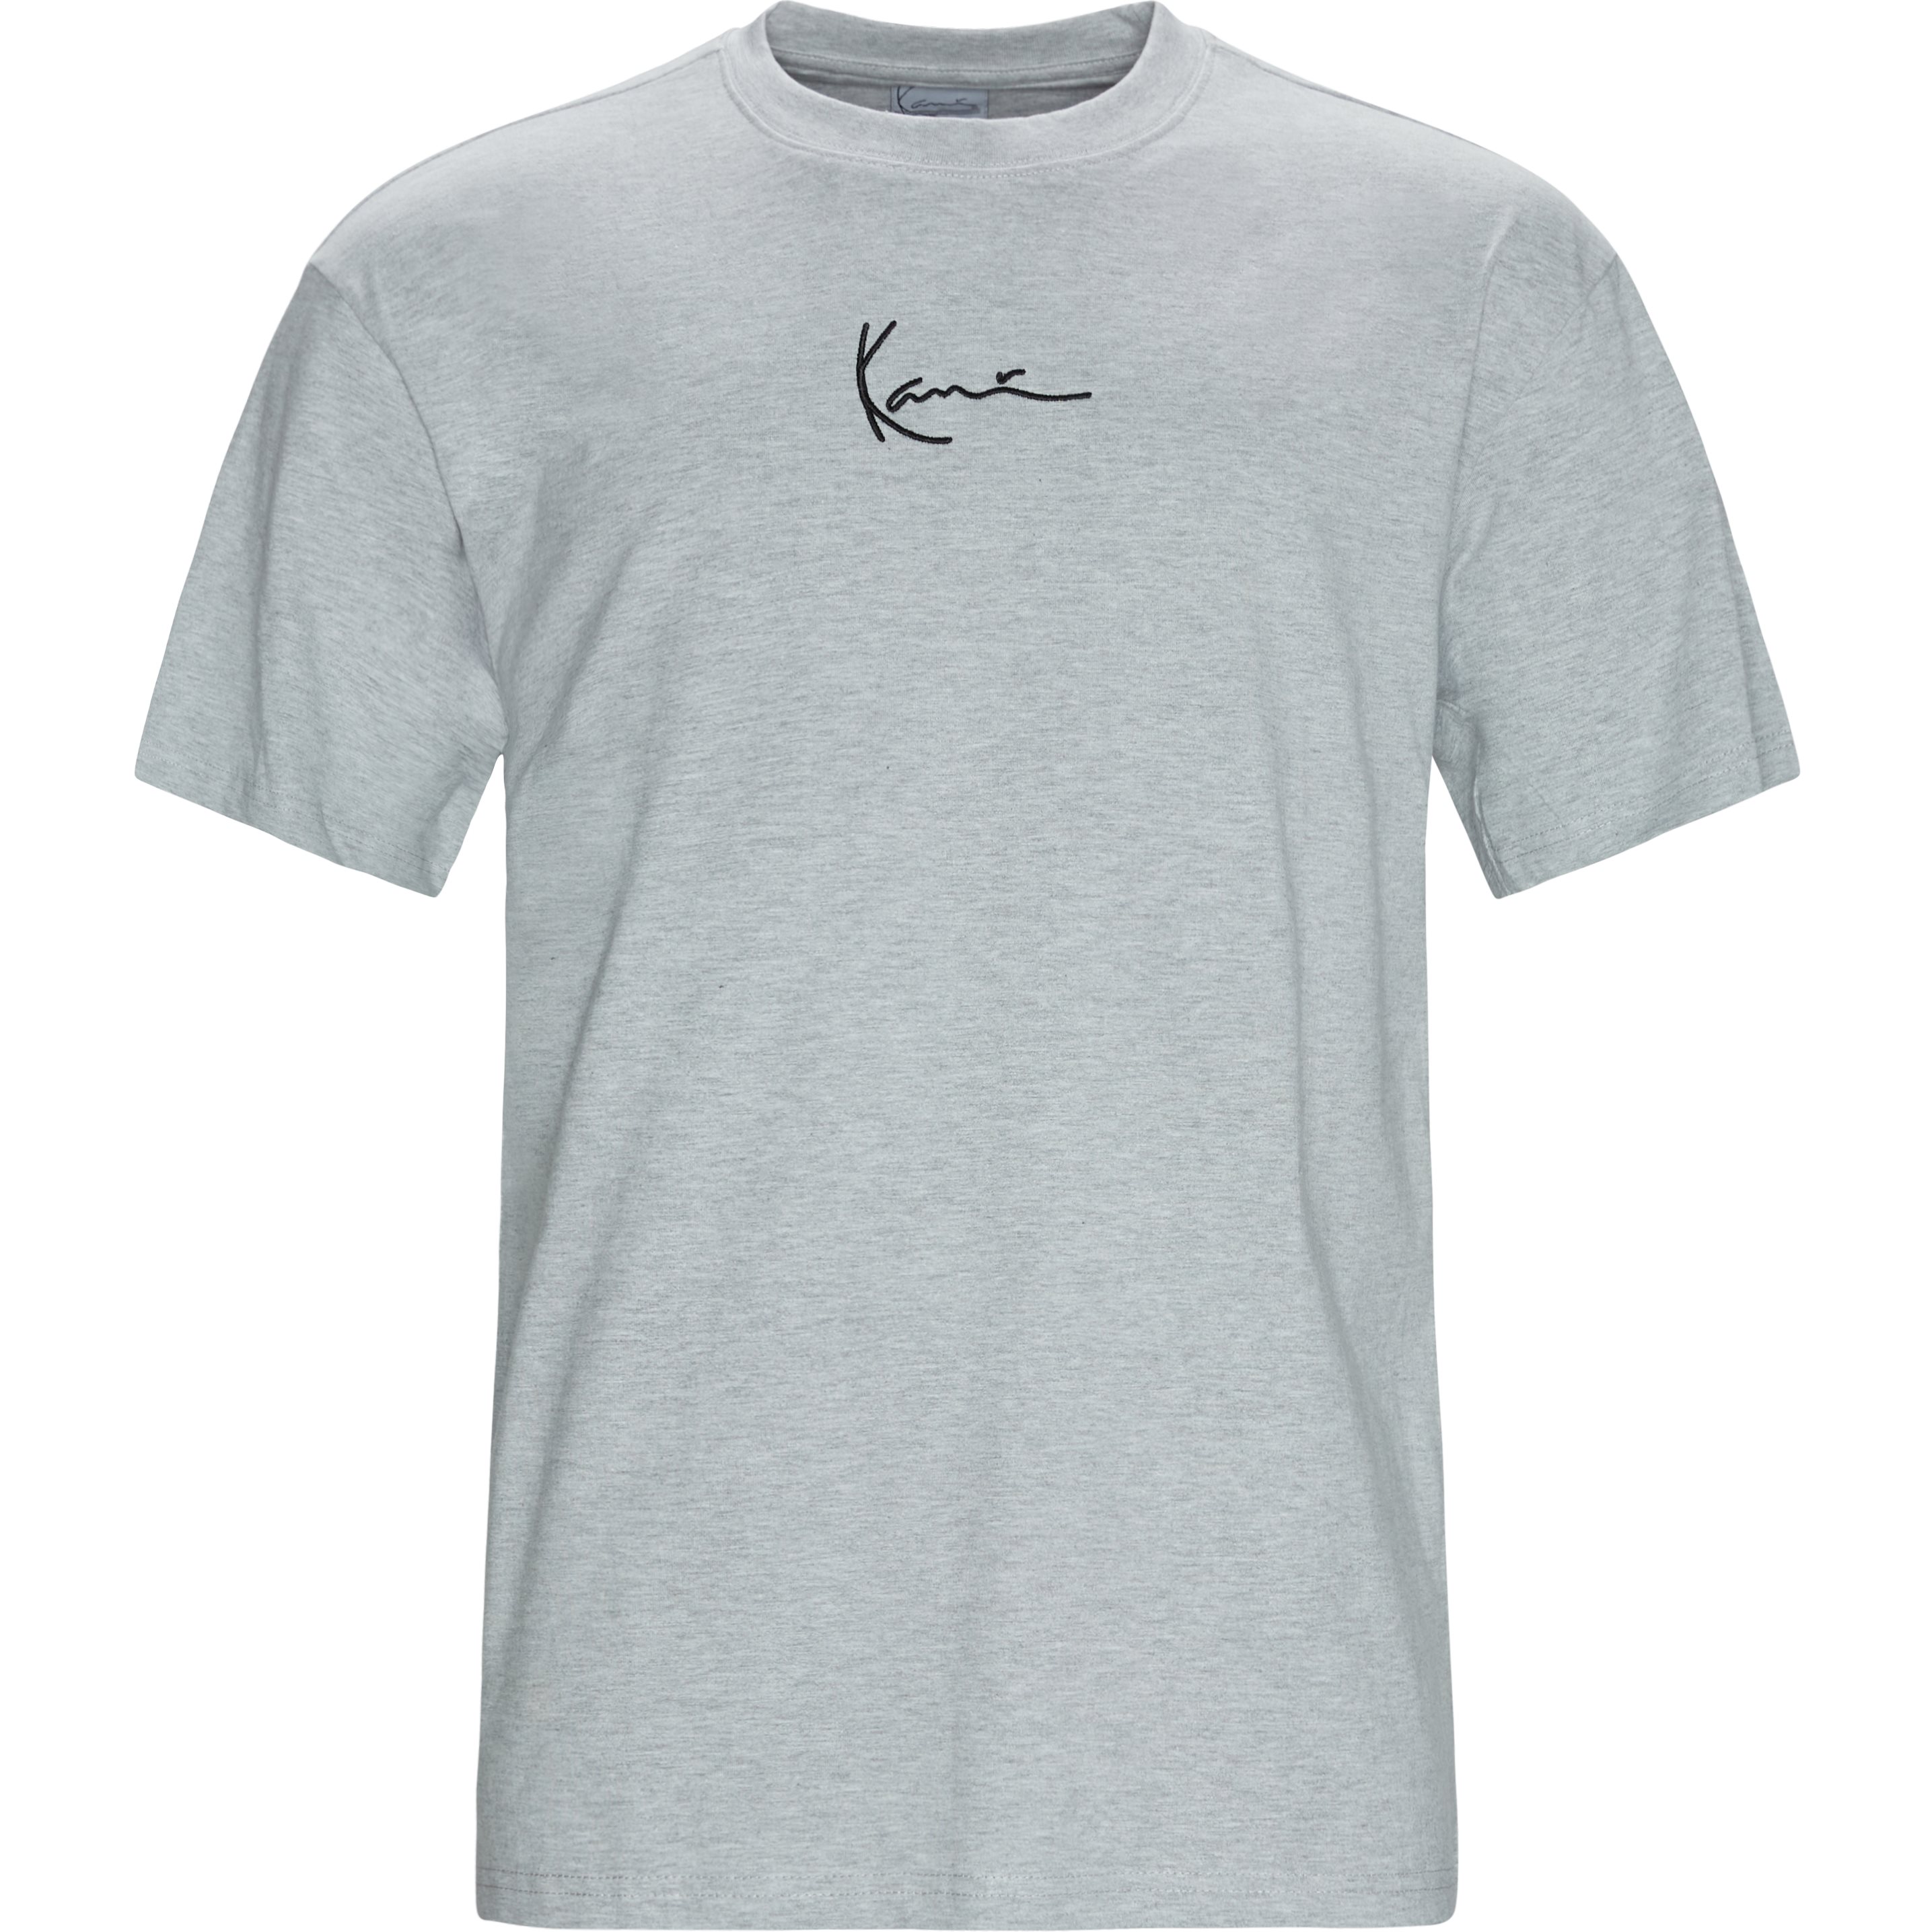 Small Signature Tee - T-shirts - Regular fit - Grey